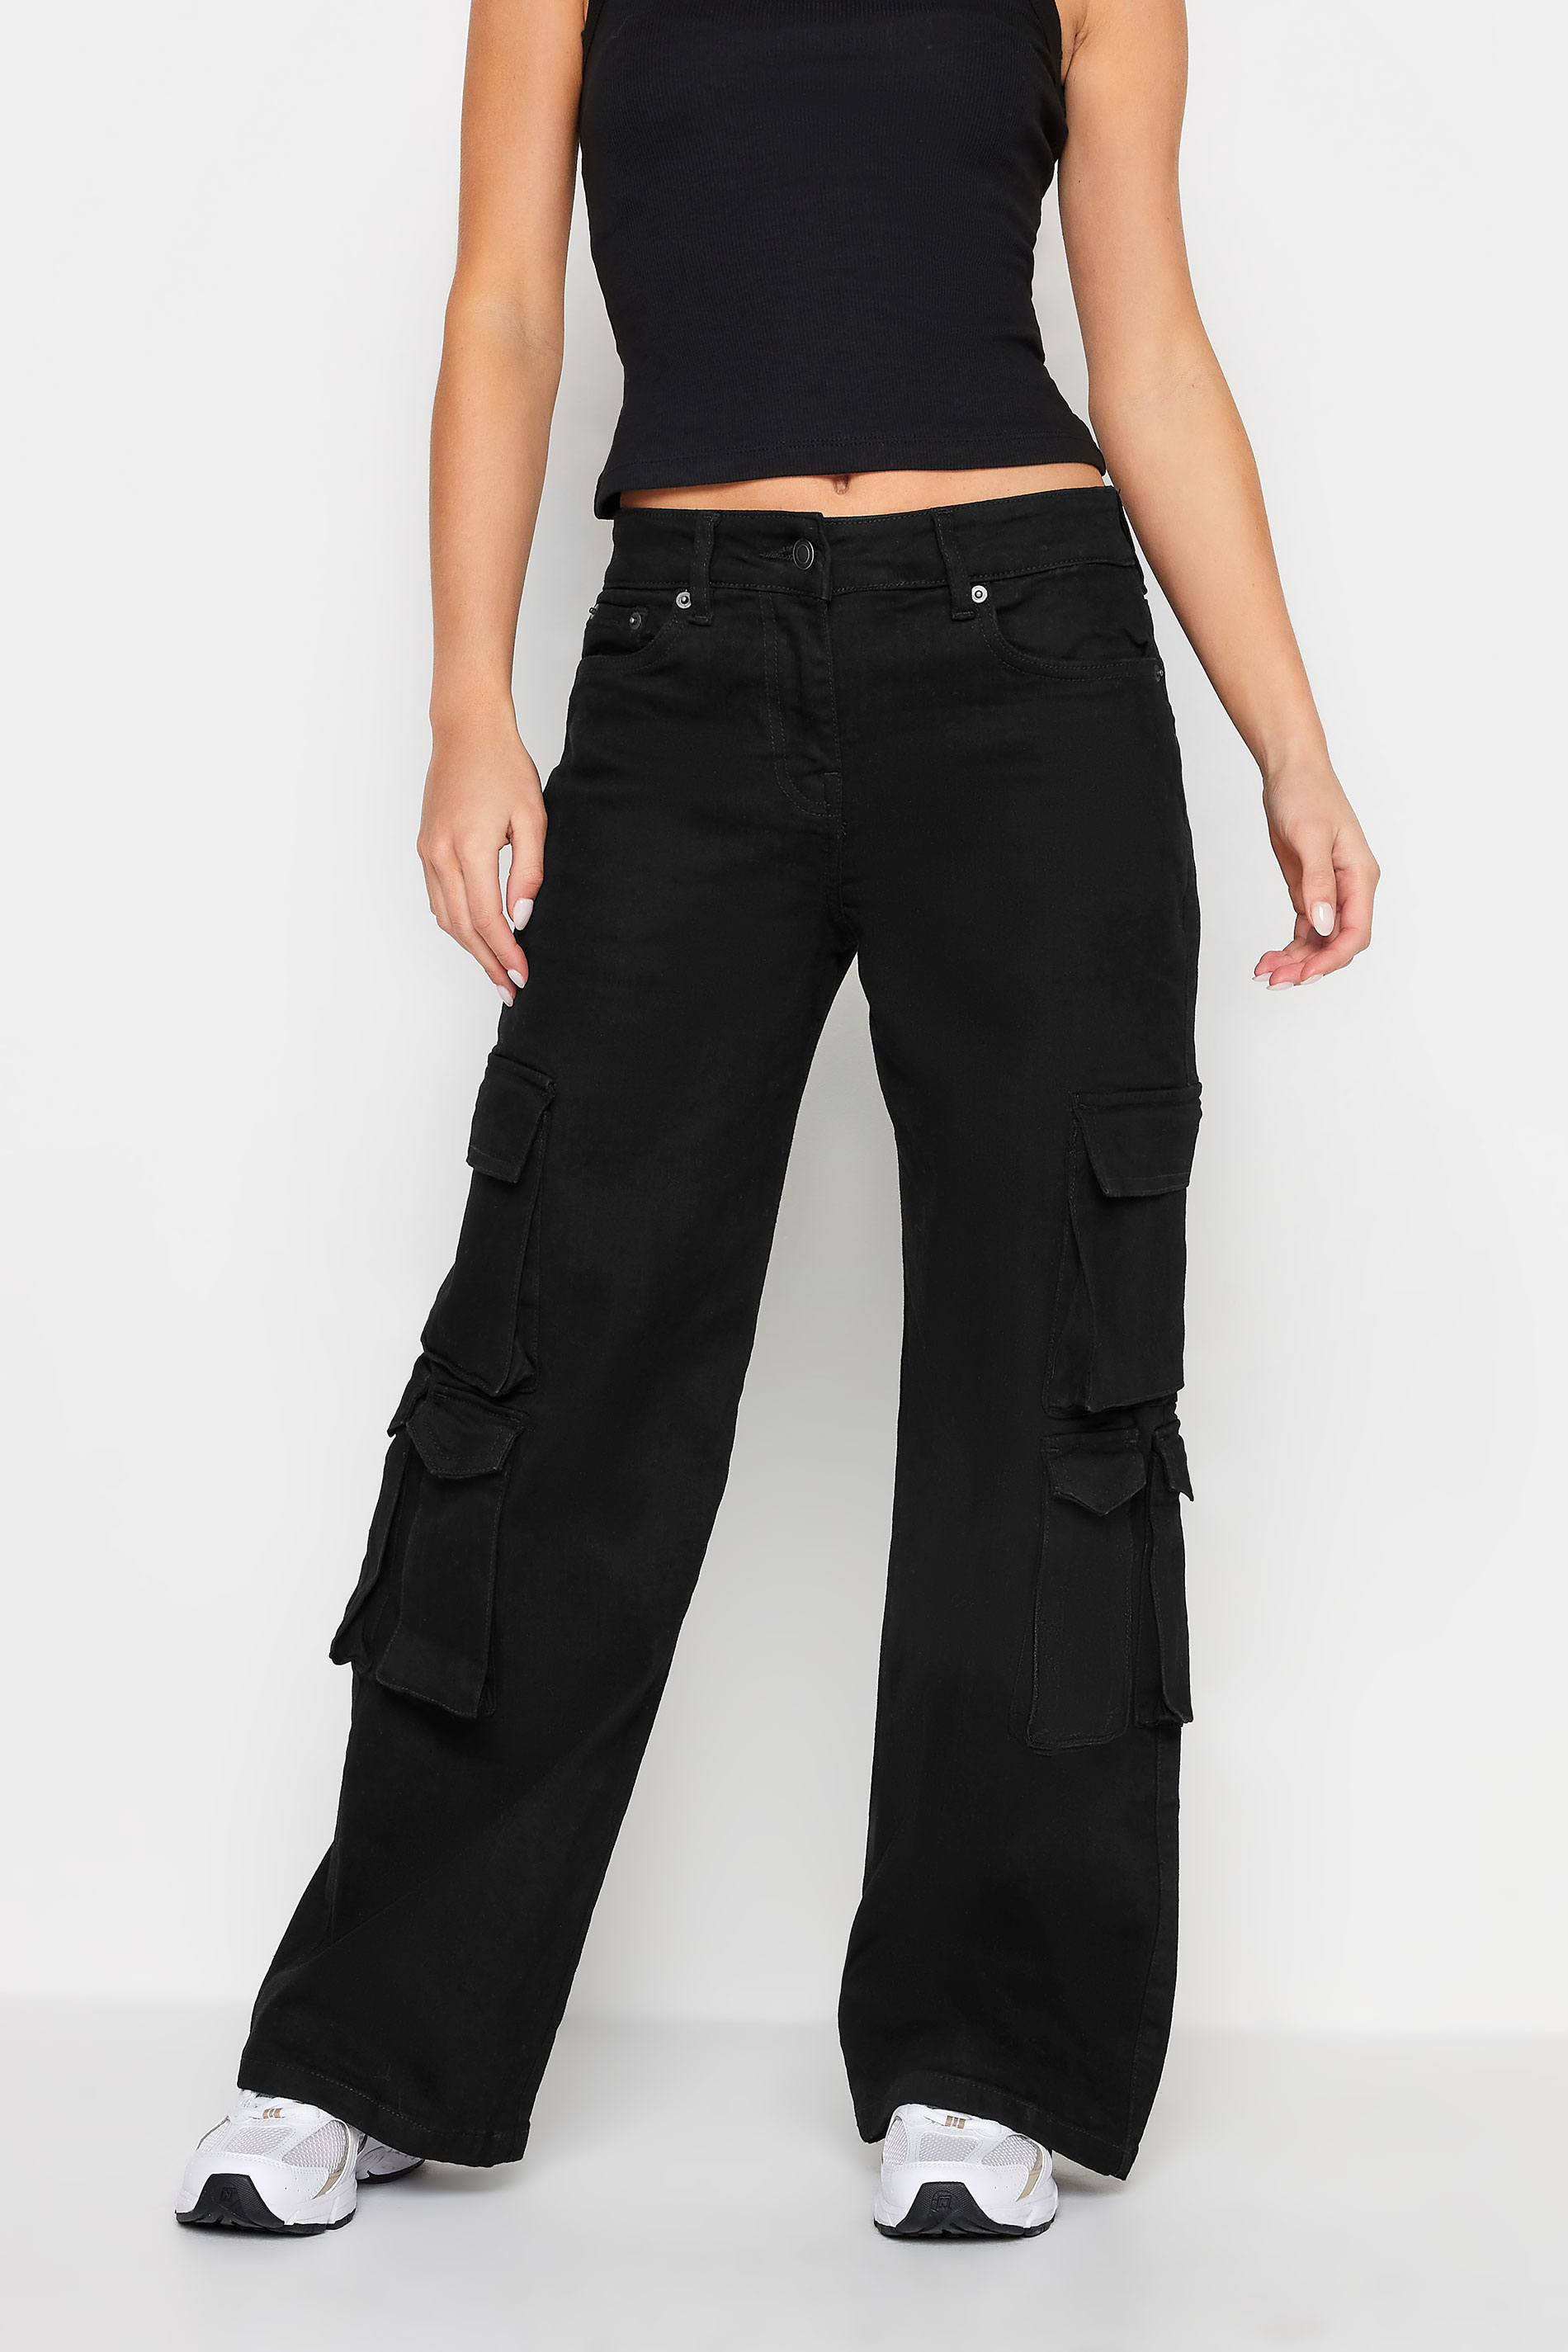 PixieGirl Black Multi Pocket Wide leg Cargo Trousers | PixieGirl 3